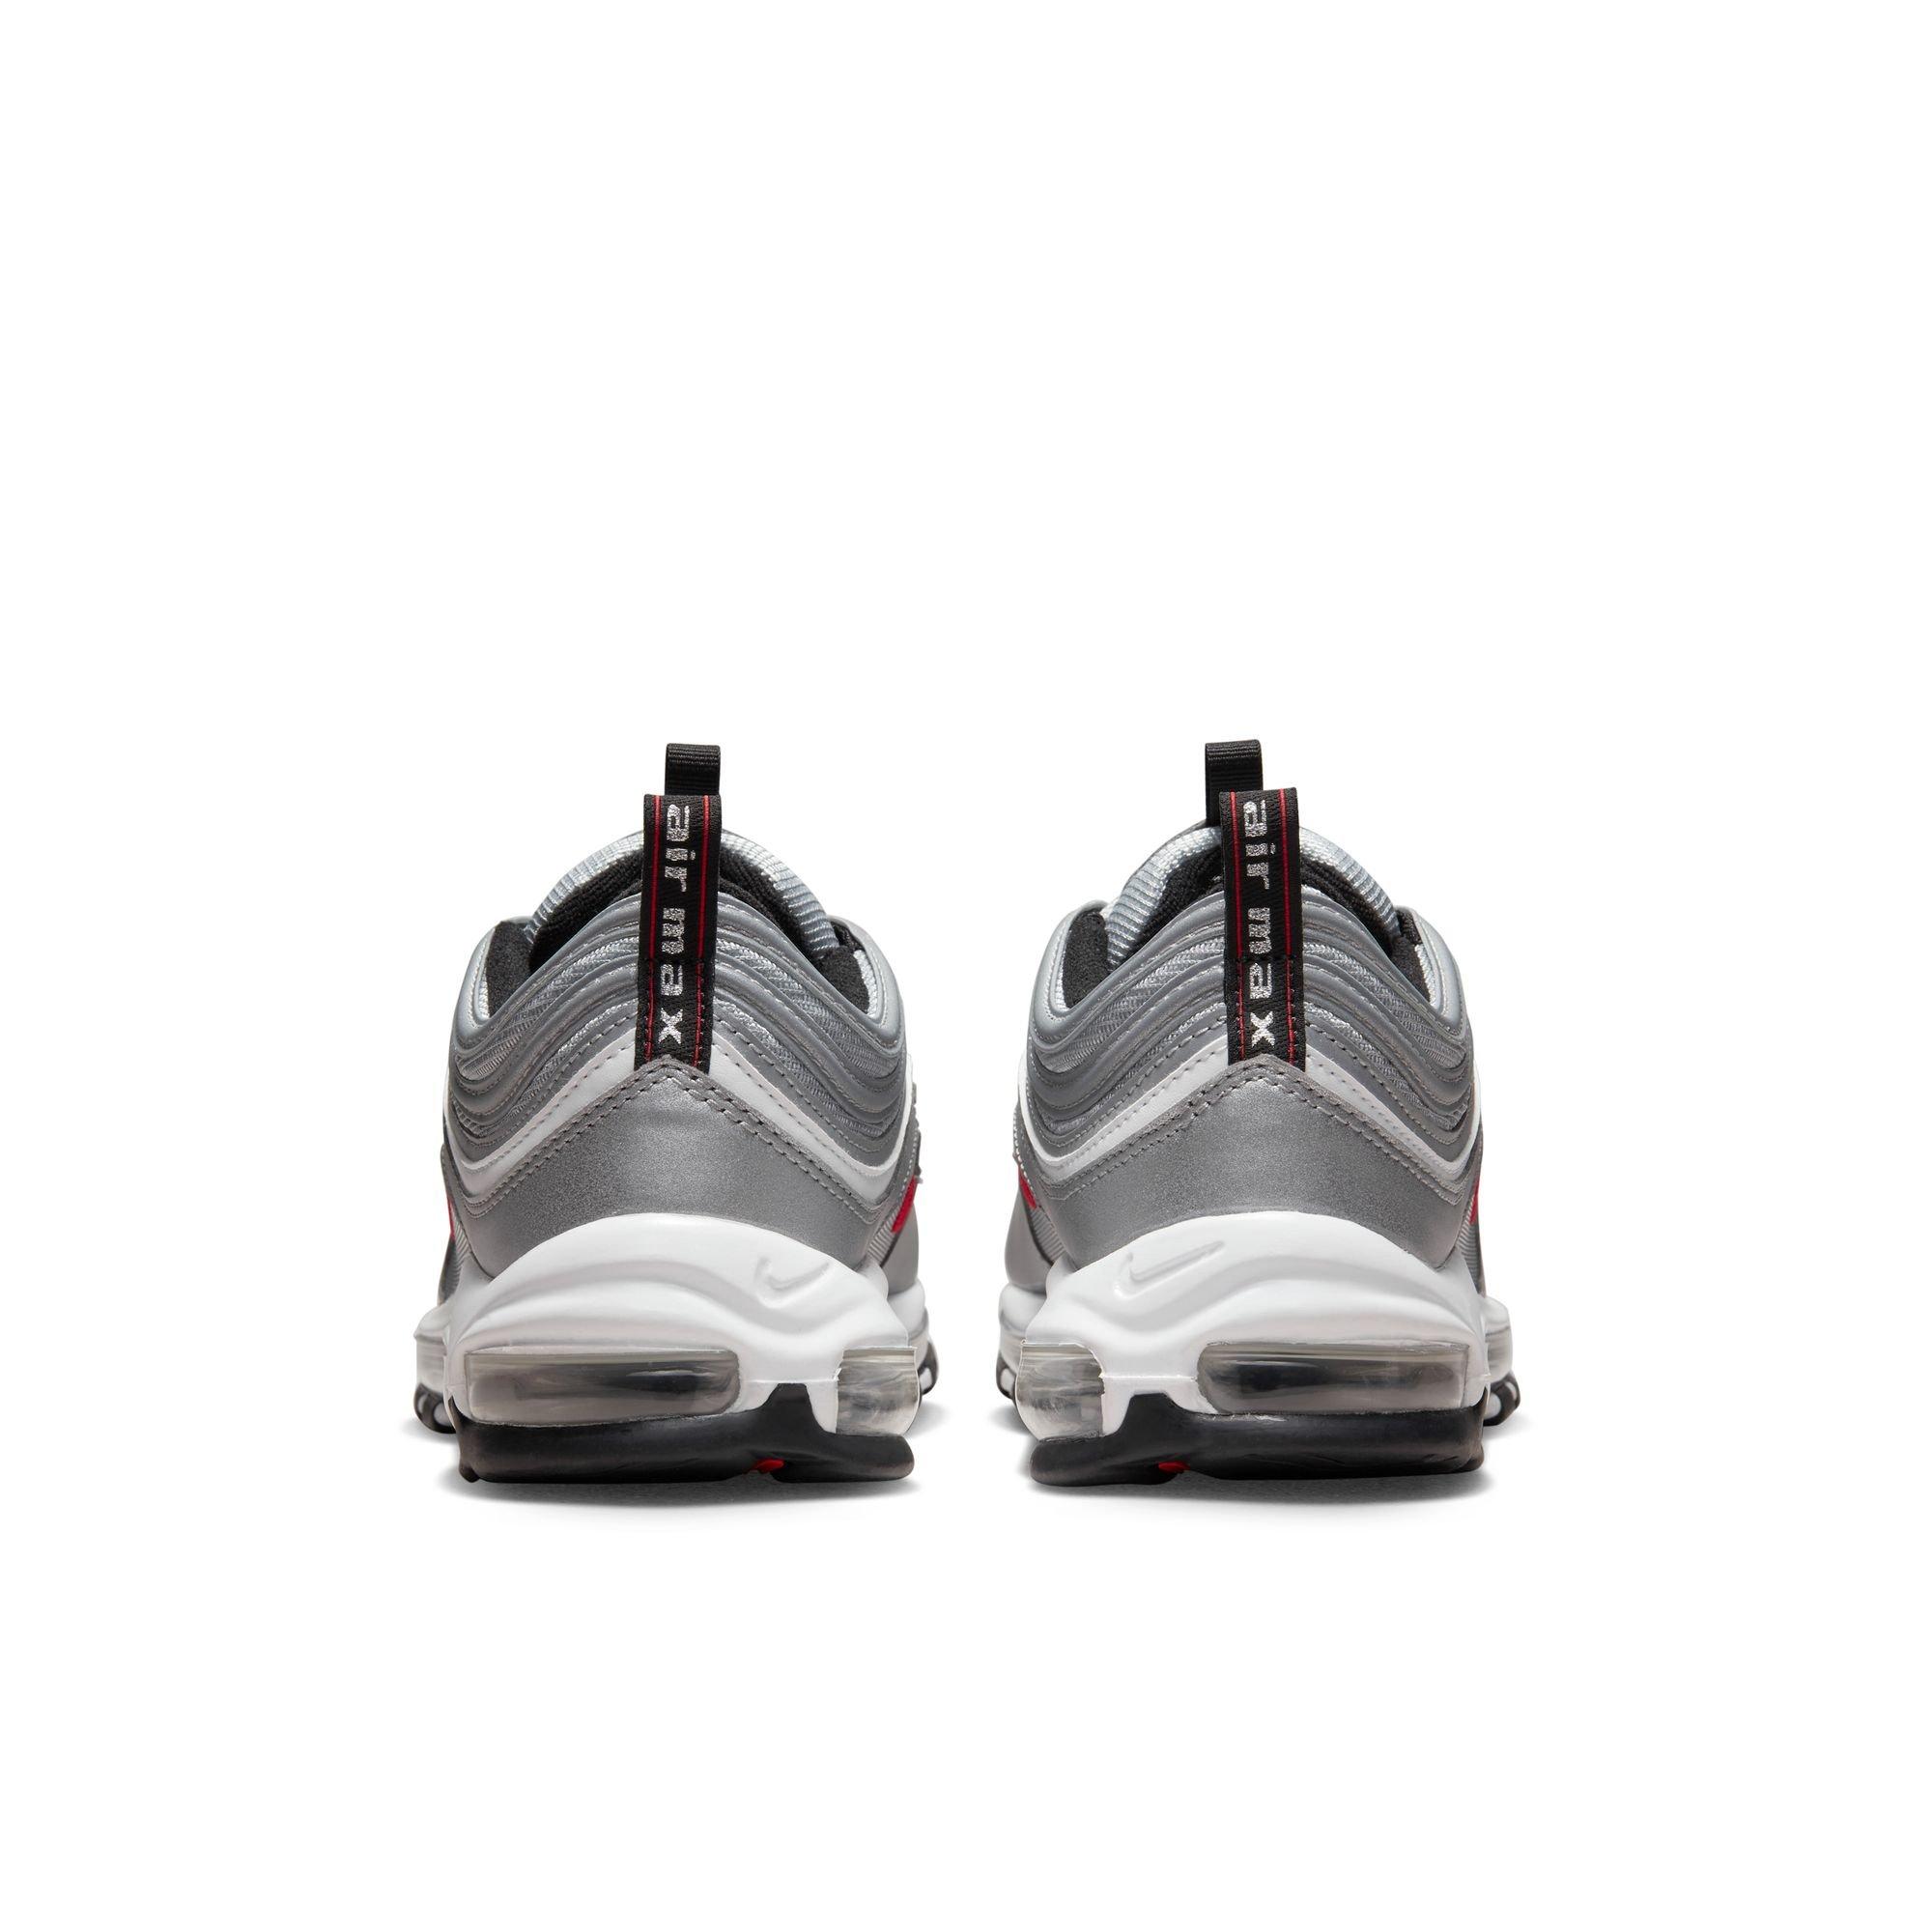 server schaamte Aggregaat Nike Air Max 97 OG​ "Metallic Silver/University Red/Black" ​Men's Shoe​